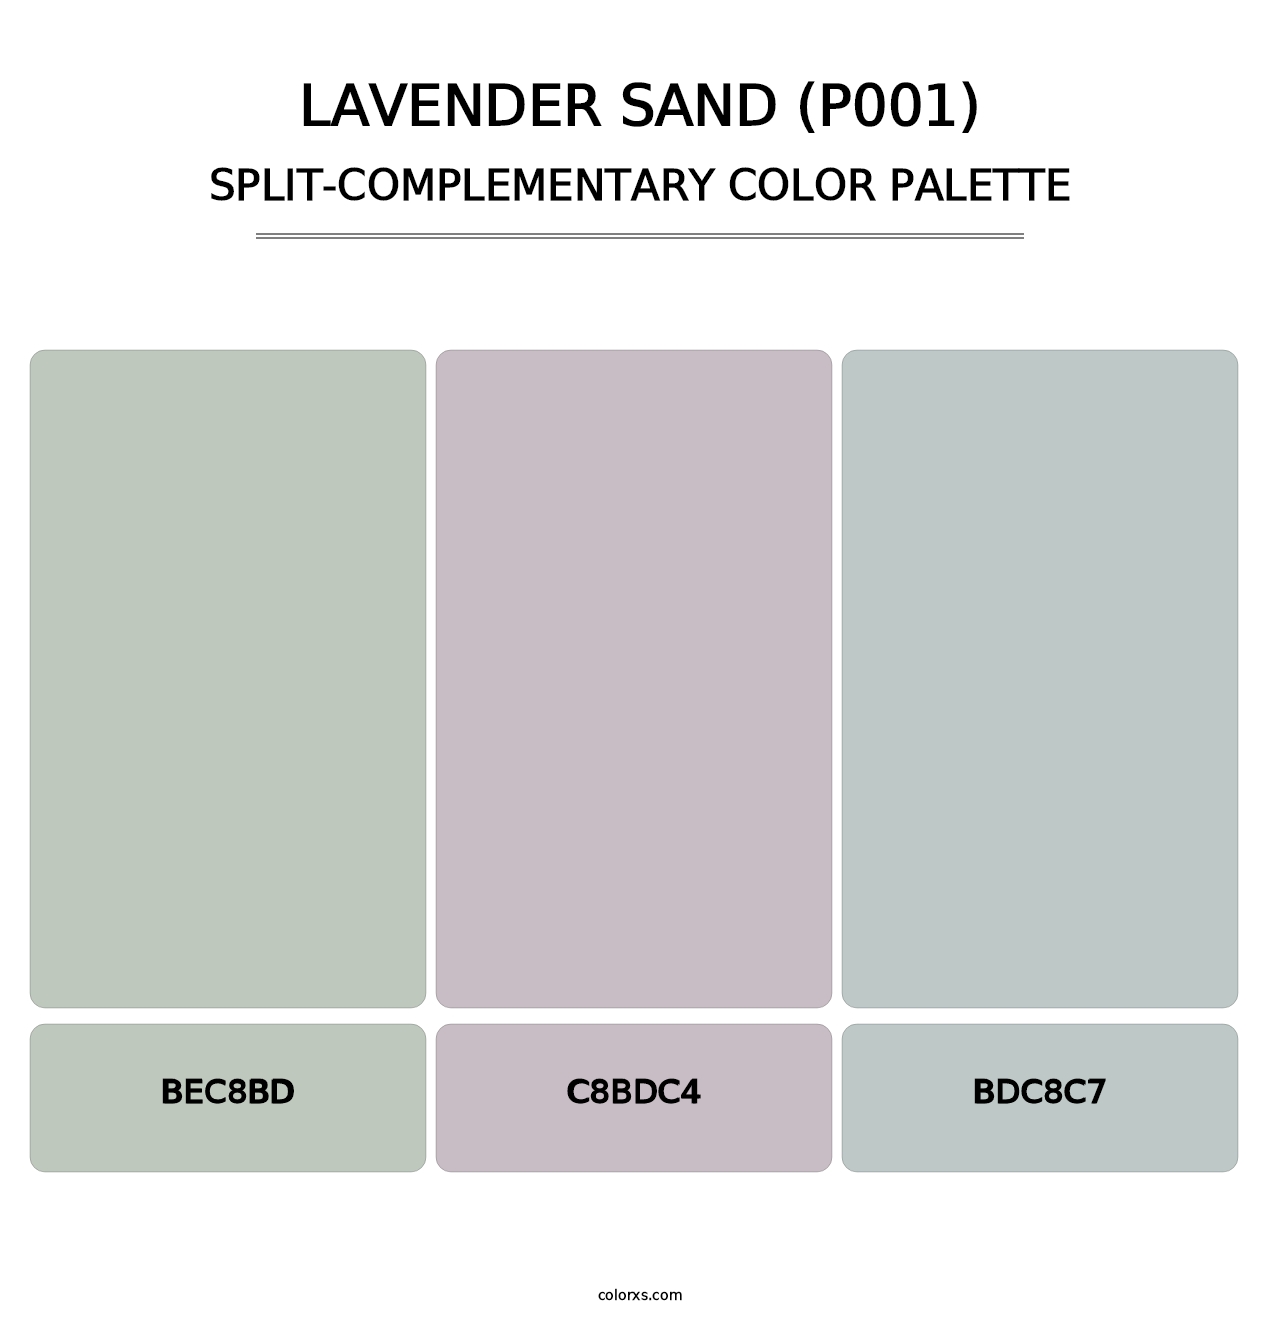 Lavender Sand (P001) - Split-Complementary Color Palette